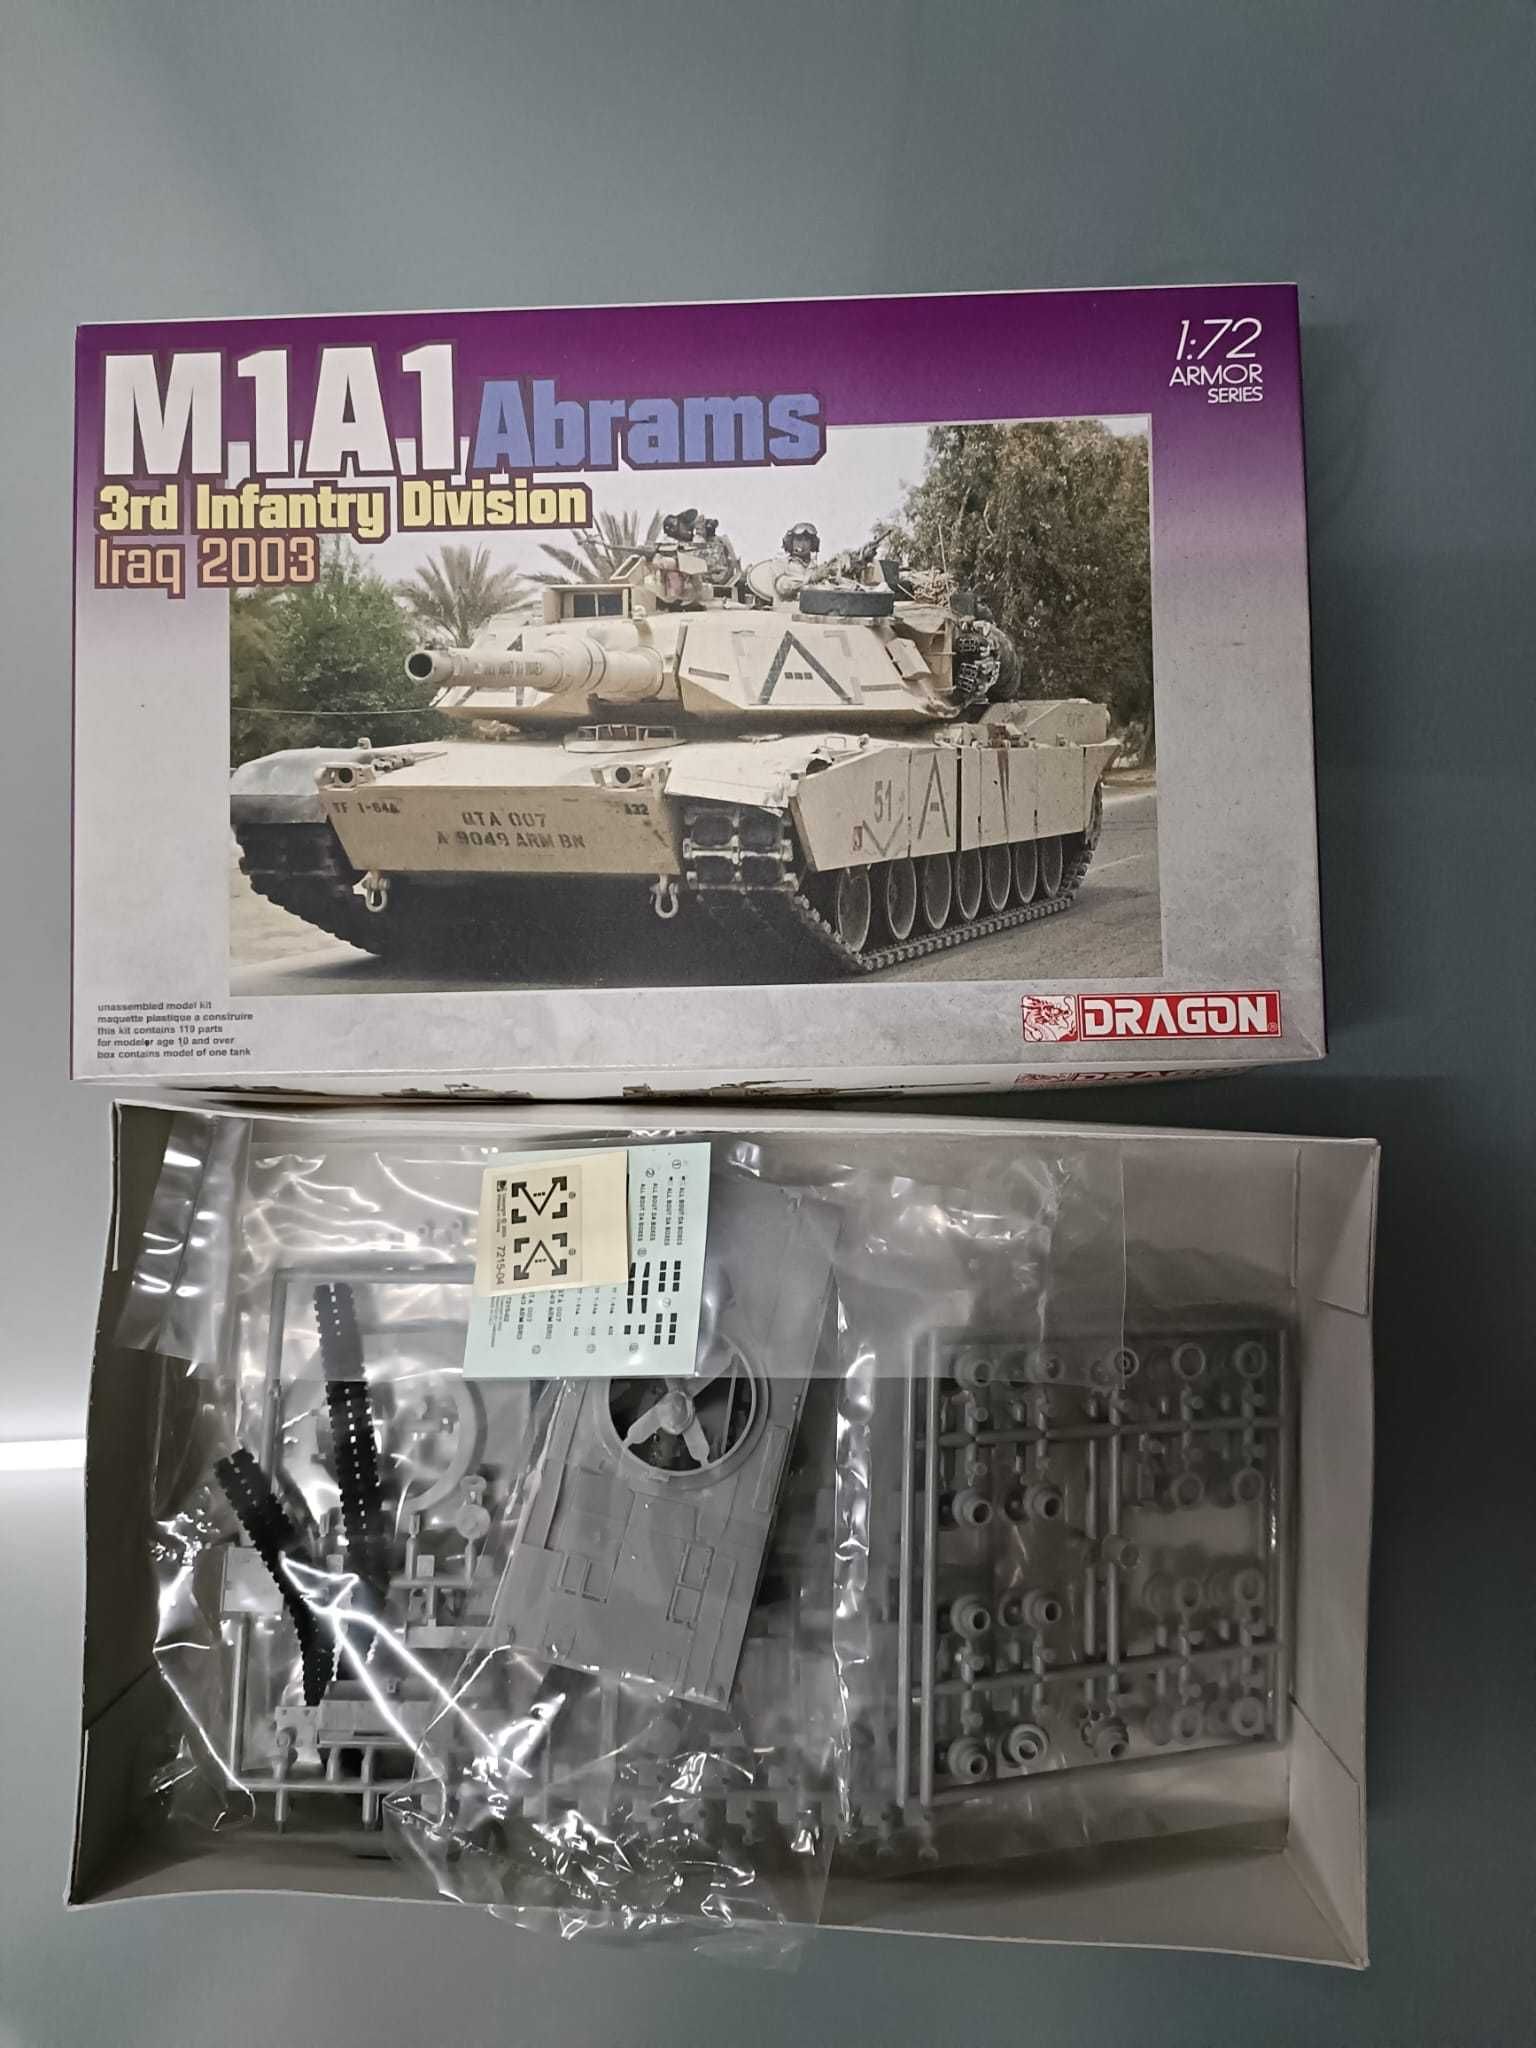 Kit Modelismo, M1A1 Abrams Iraq 2003, Dragon, escala 1:72